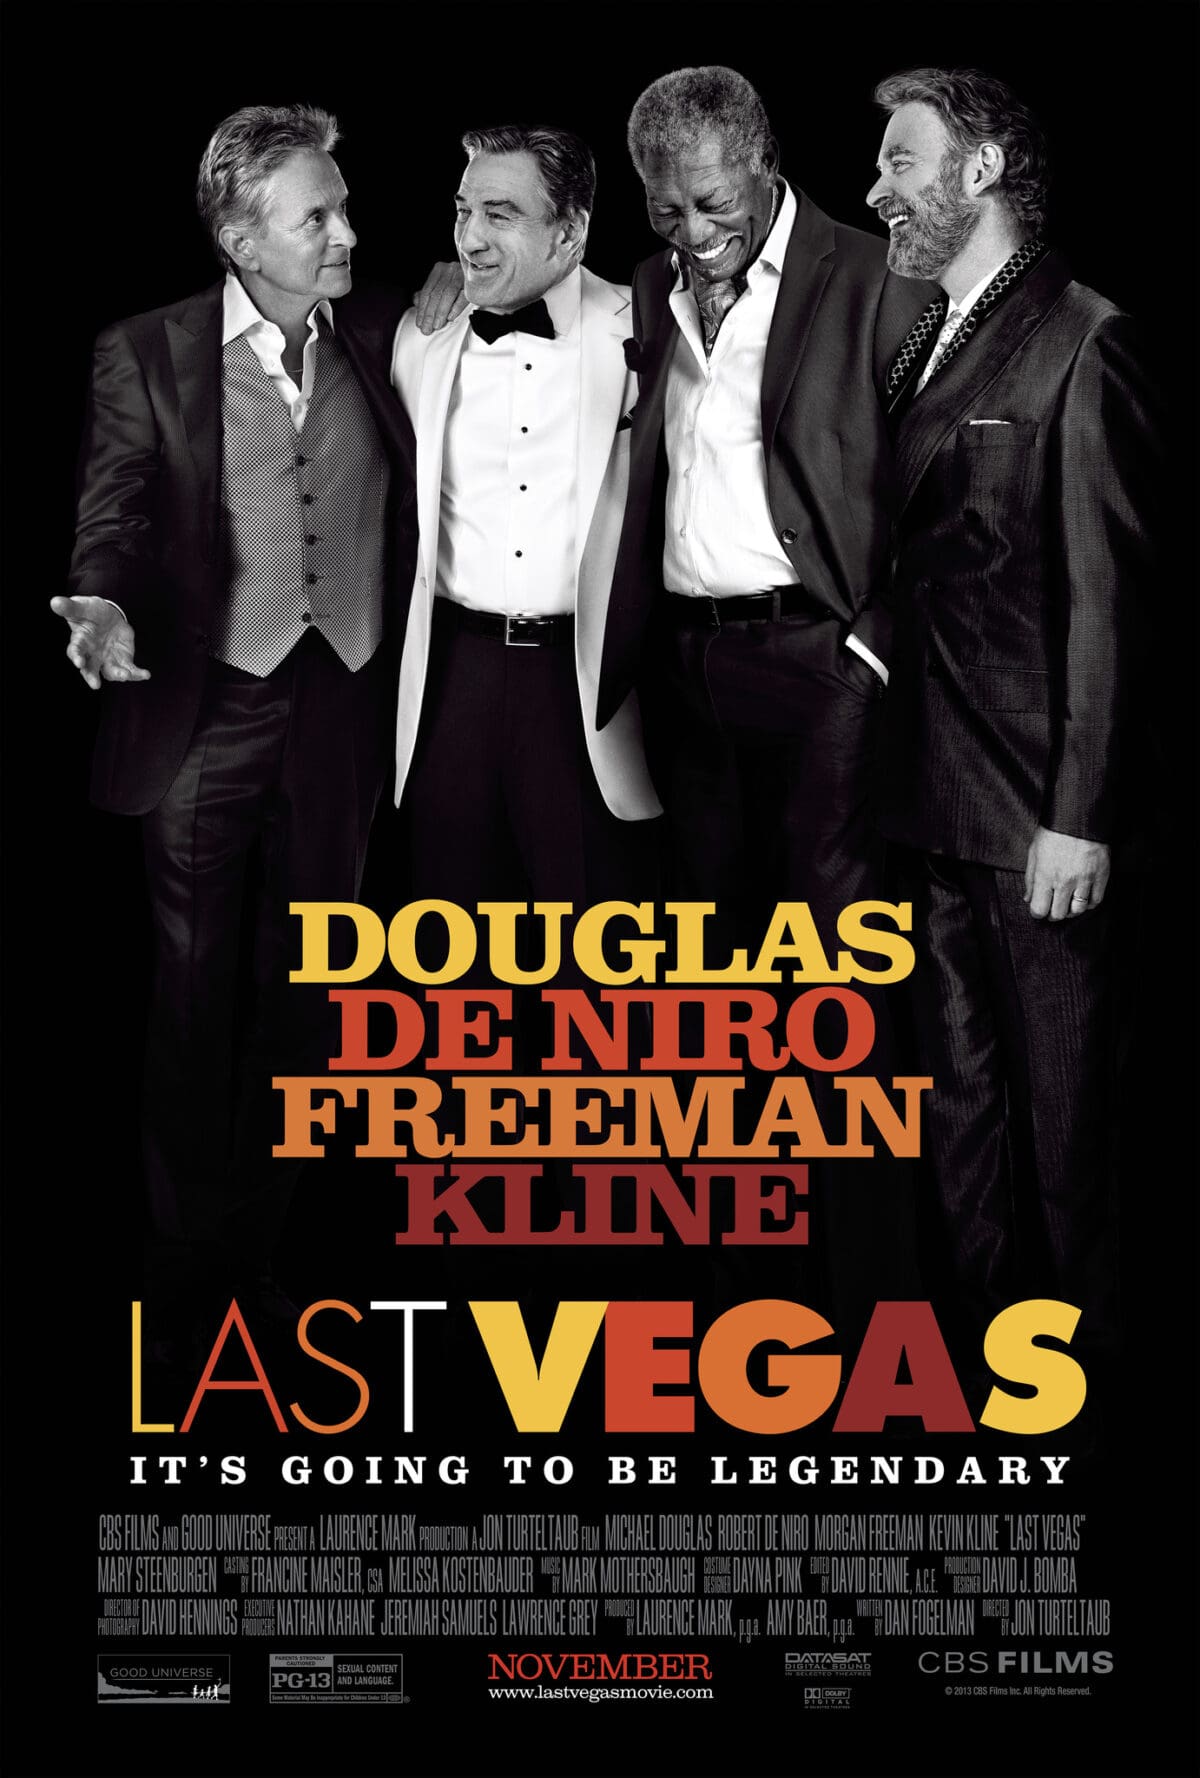 Movies Like The Hangover - Last Vegas